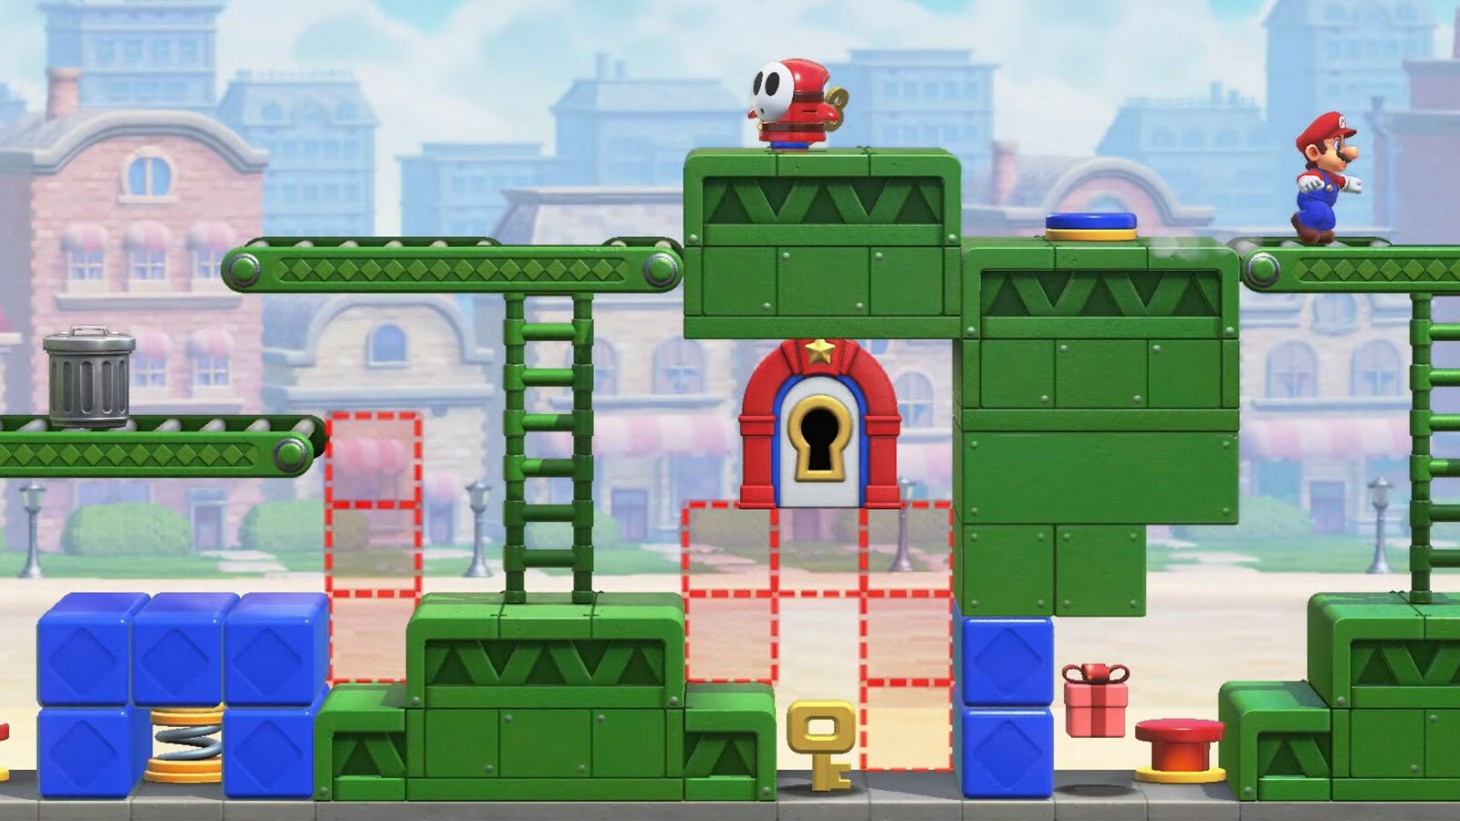 Mario Vs. Donkey Kong Making A Return On Switch - Game Informer